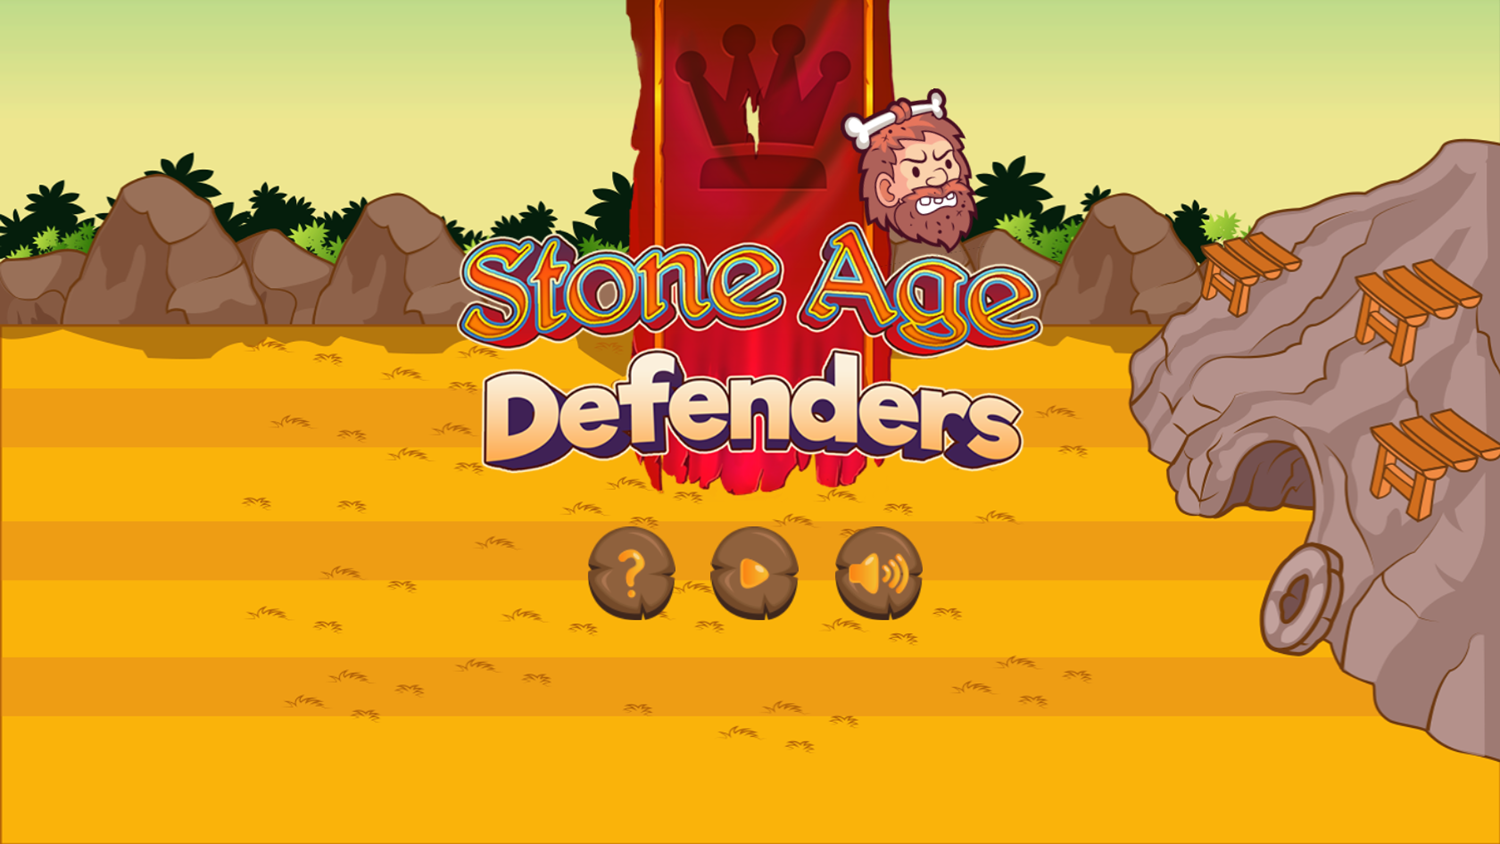 Stone Age Defender Game Welcome Screen Screenshot.